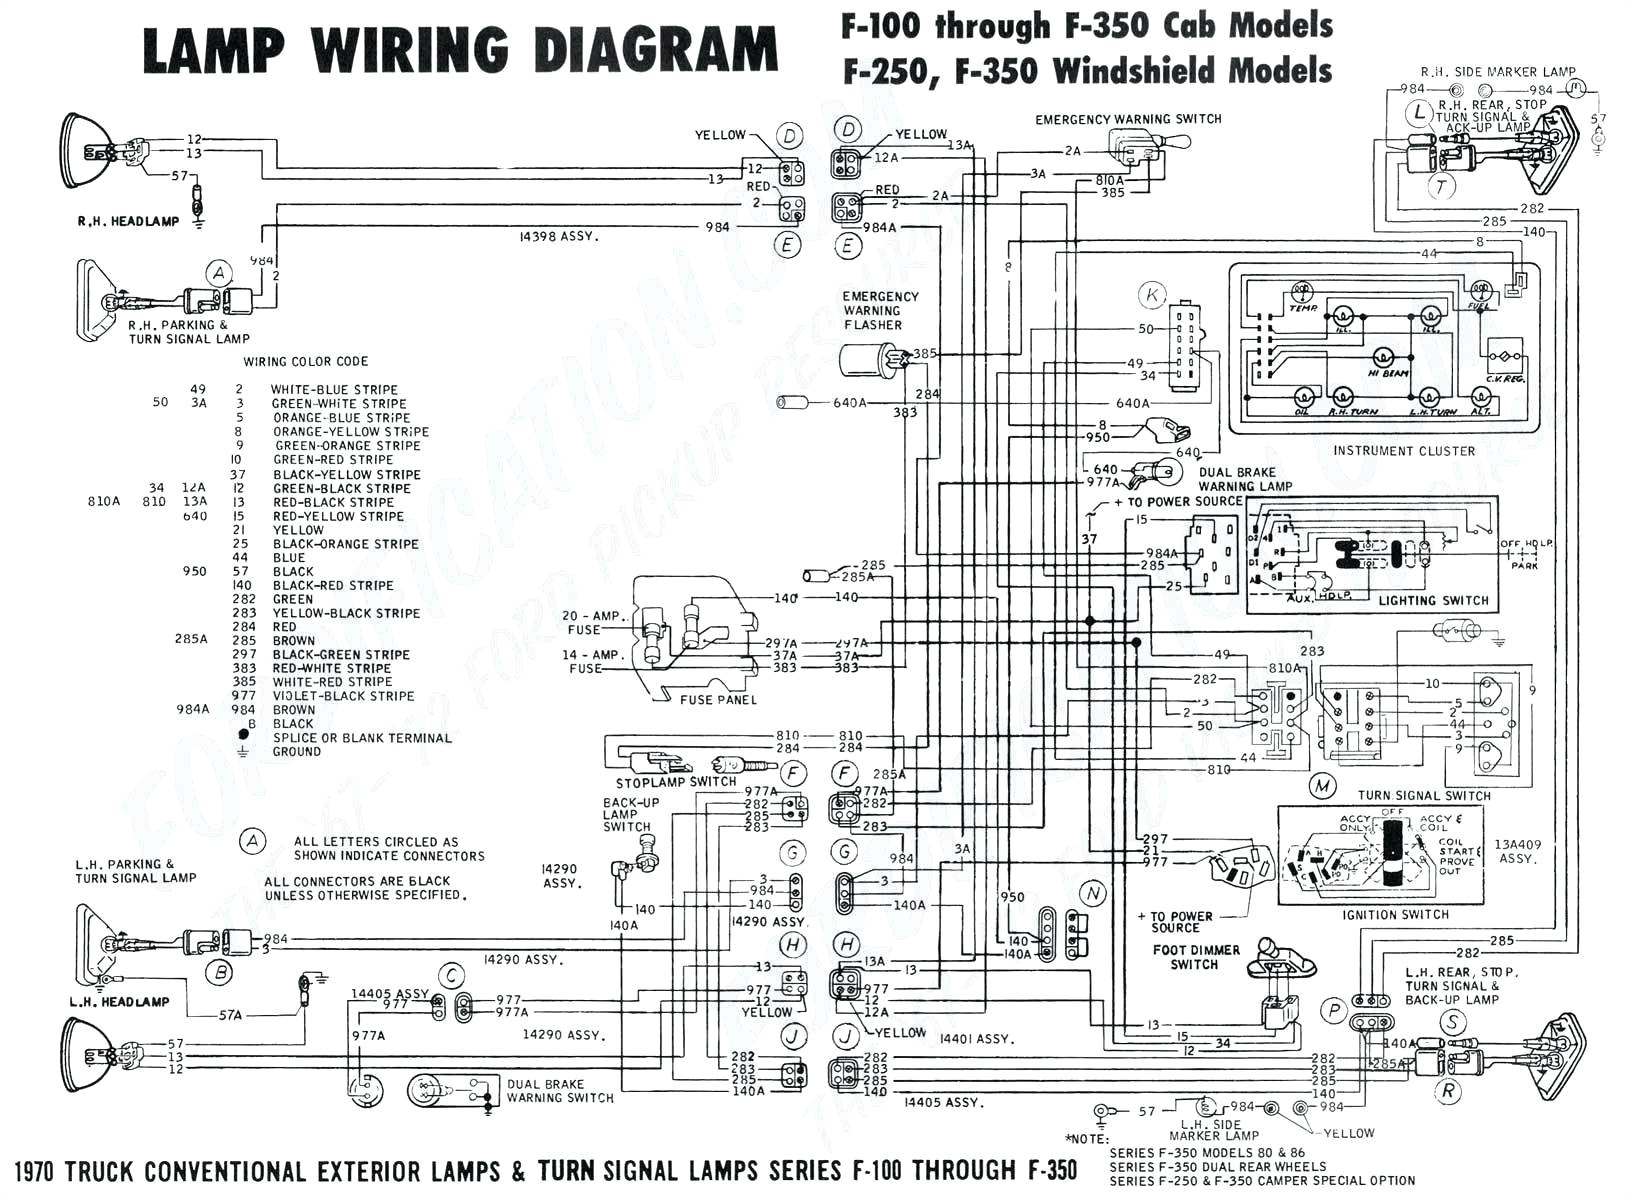 vdo 370 155 wiring diagram wiring diagrams data vdo 370 155 wiring diagram